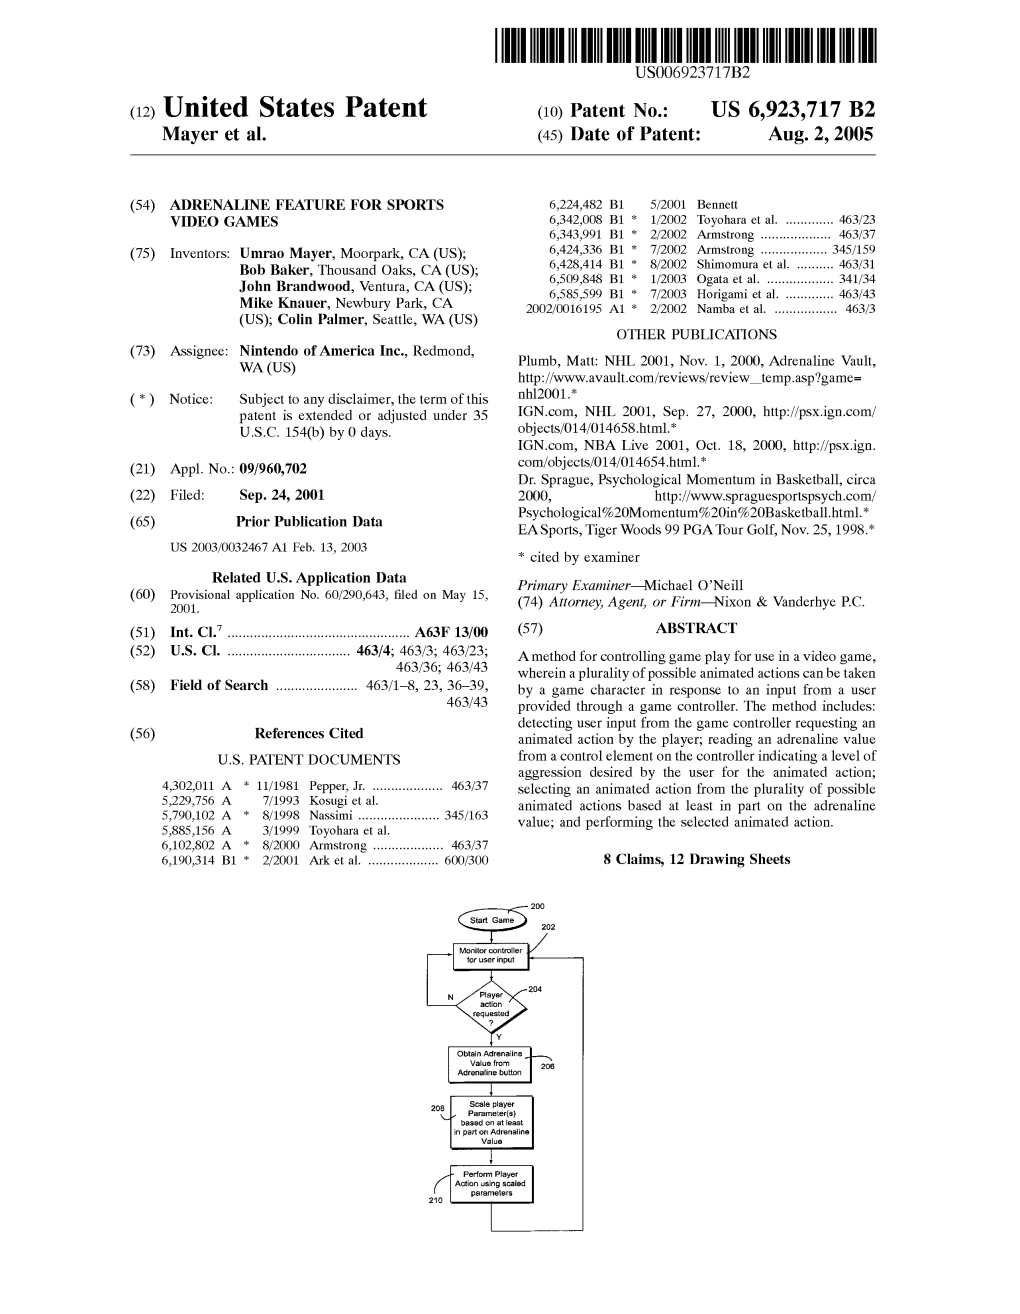 (12) United States Patent (10) Patent No.: US 6,923,717 B2 Mayer Et Al